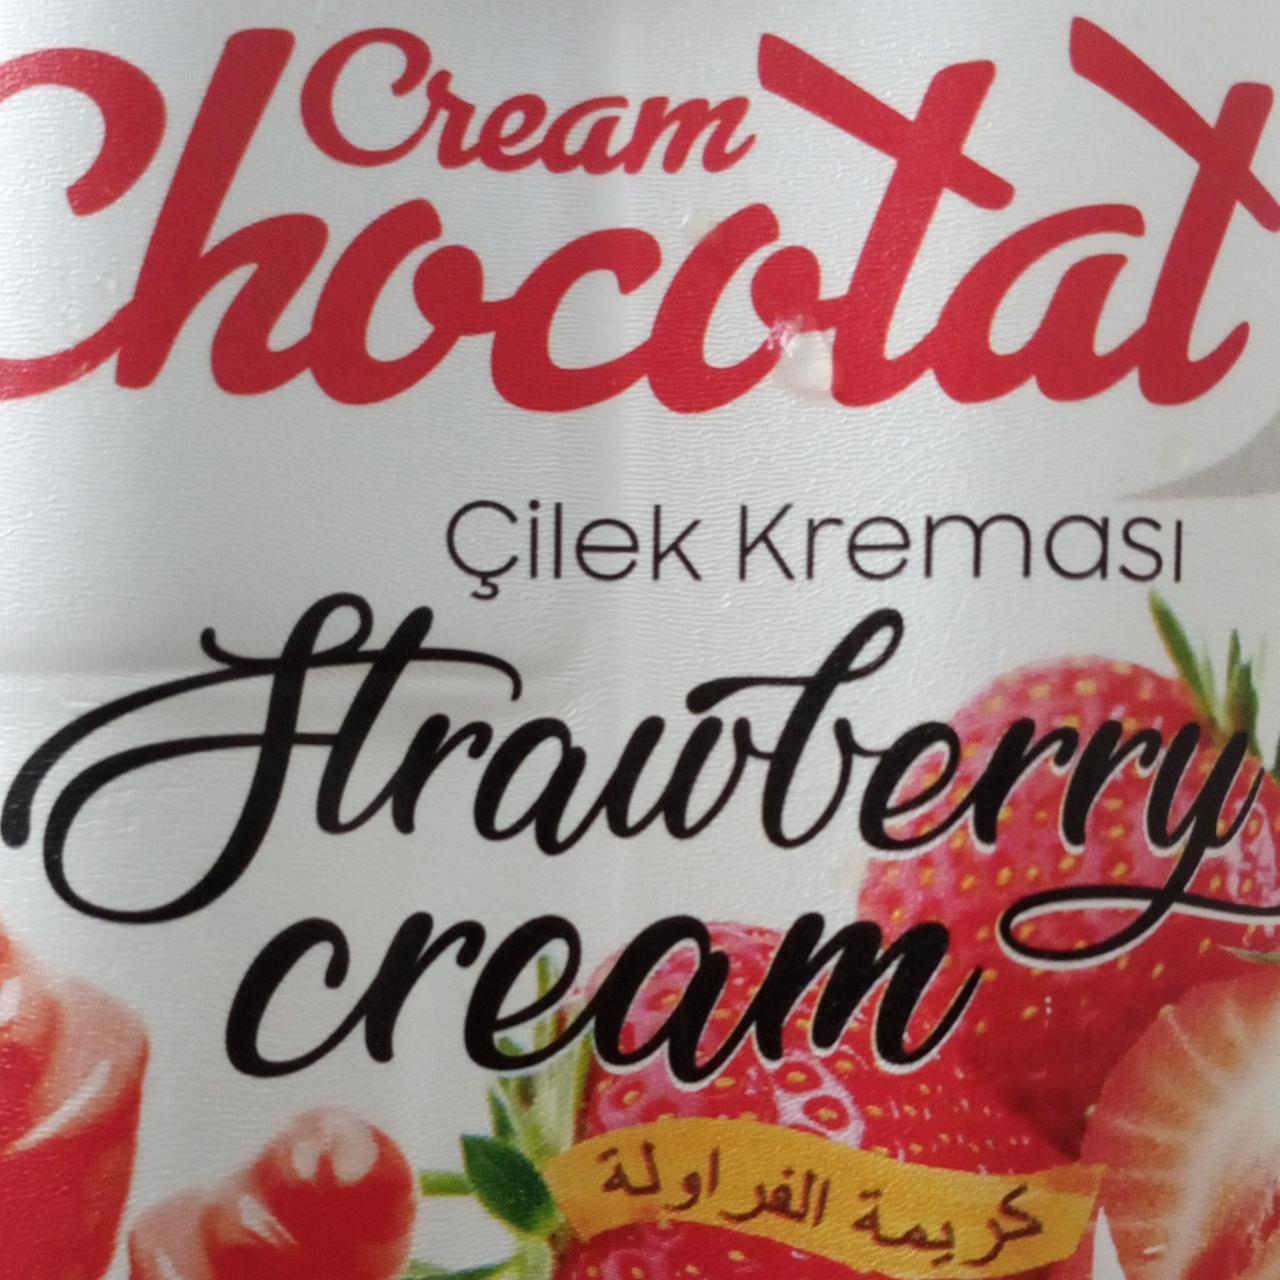 Фото - Паста полунична Strawberry Cream Cream Chocotat